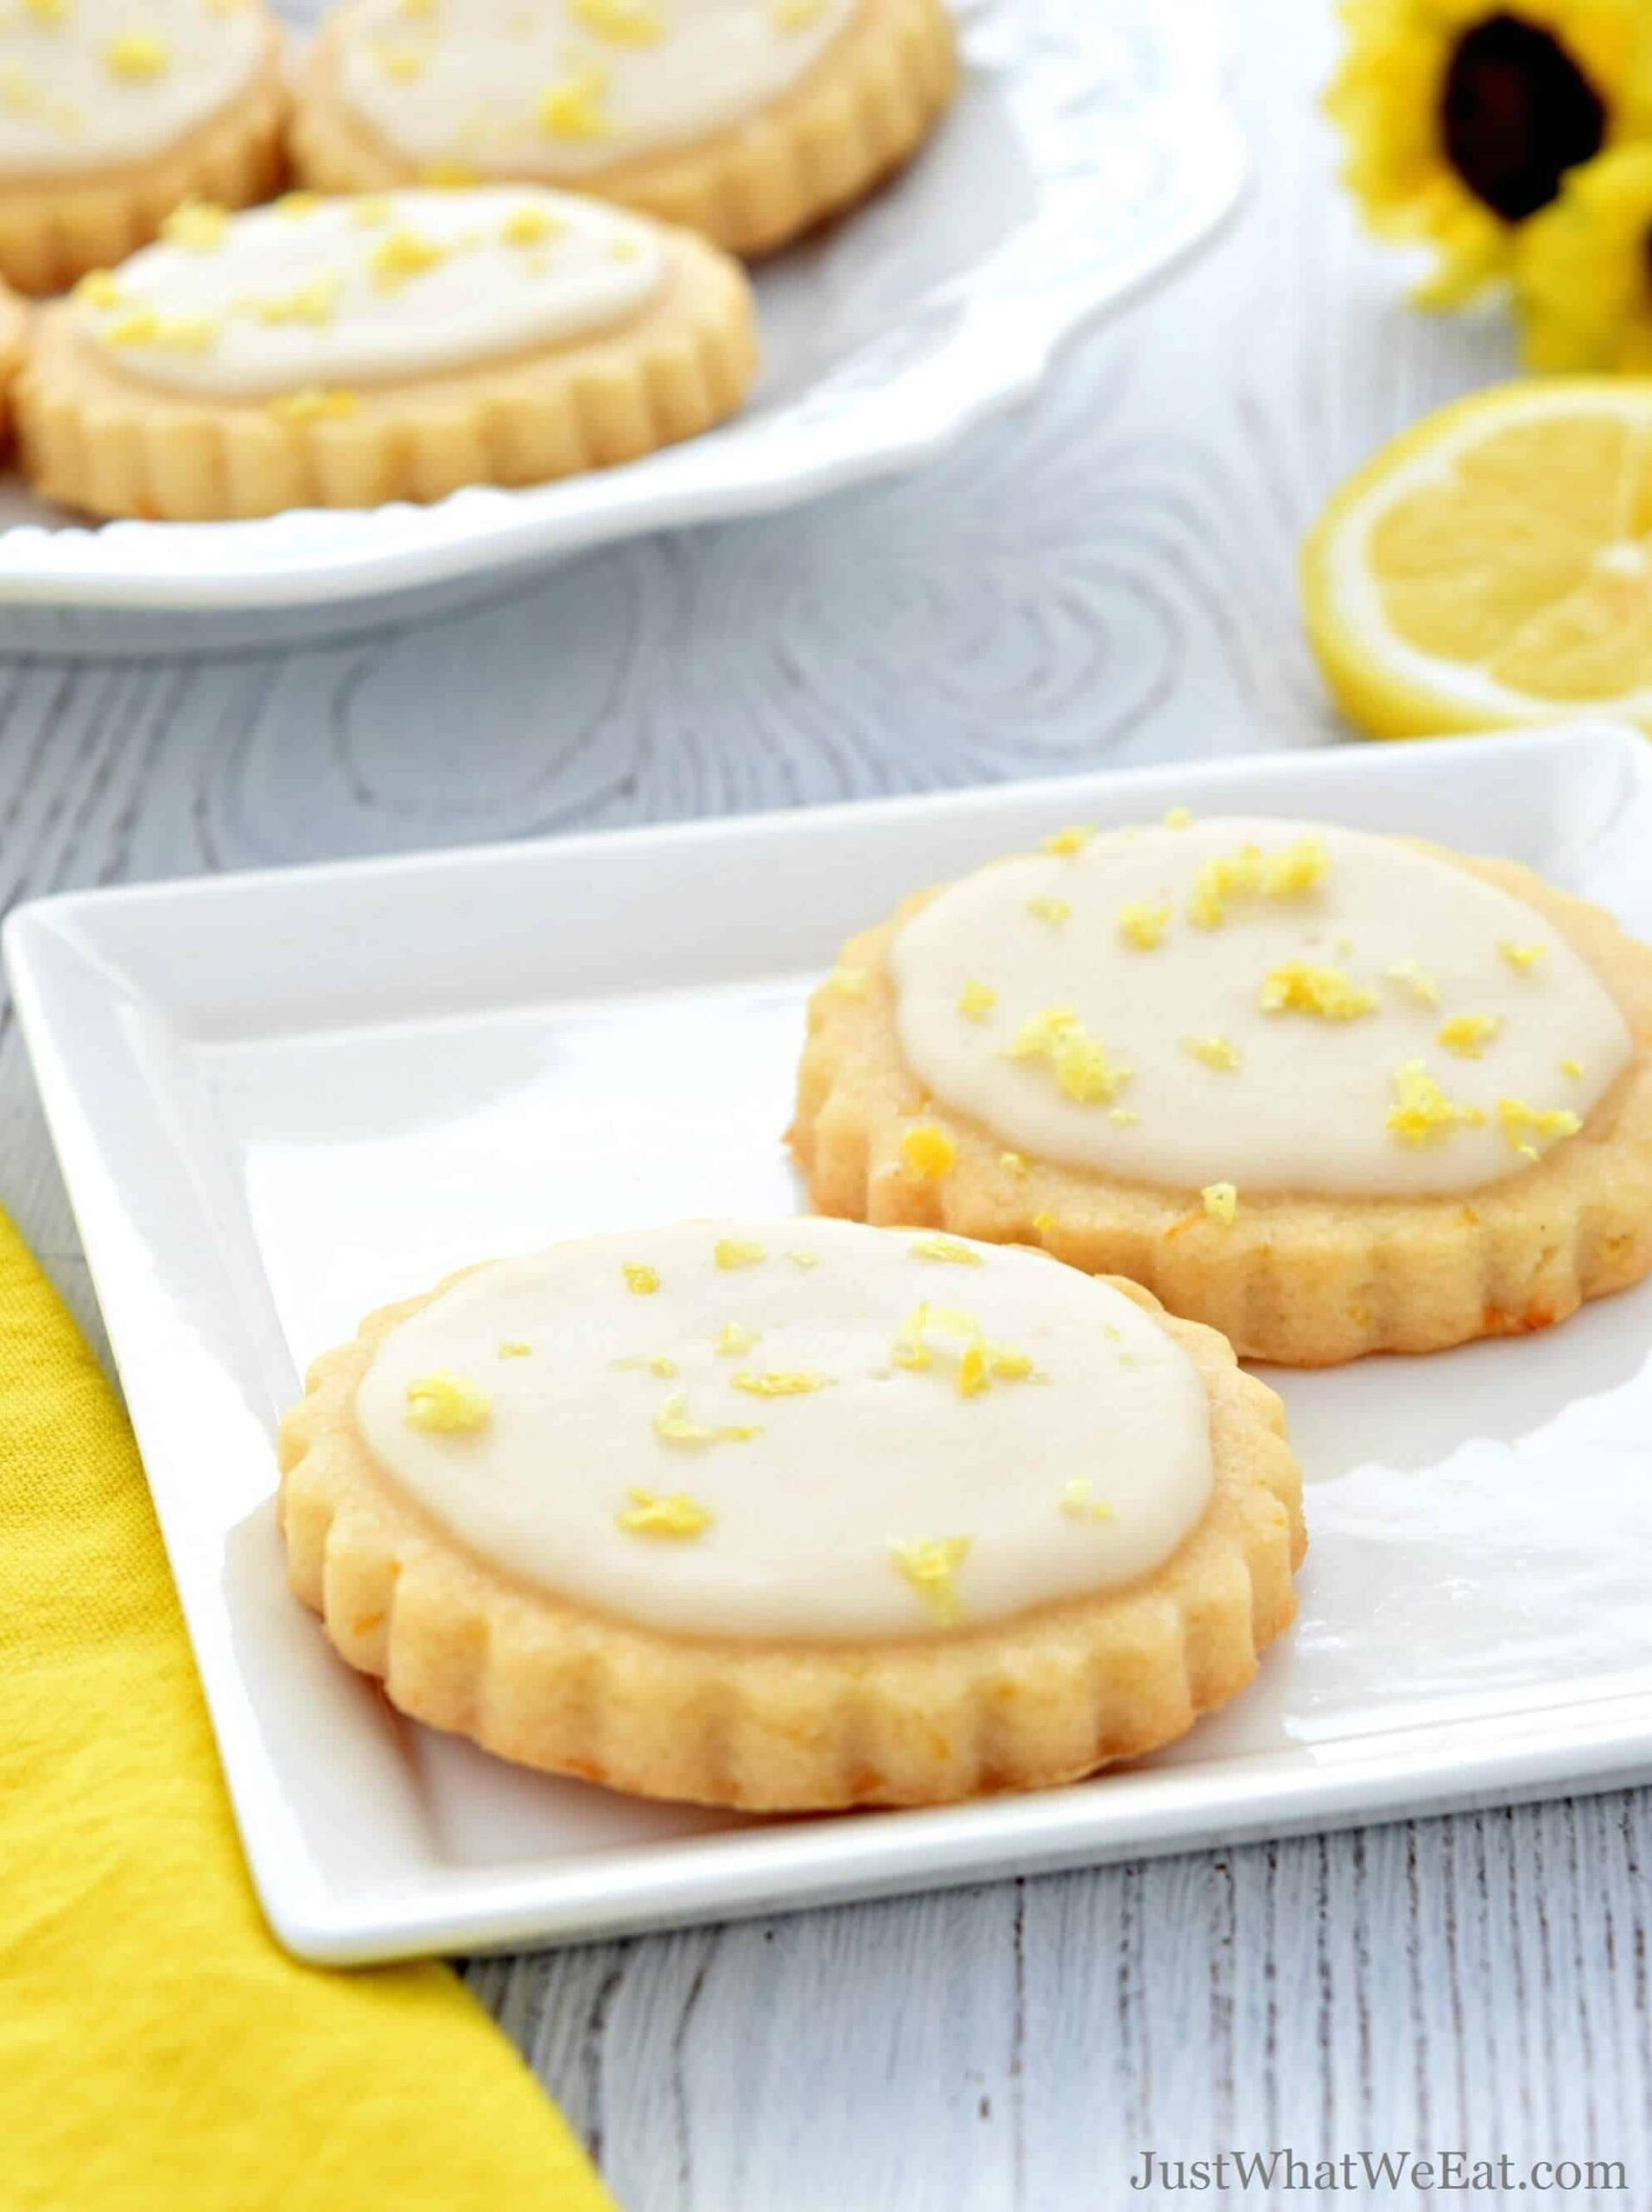  Tangy lemon shortbread that's gluten-free!